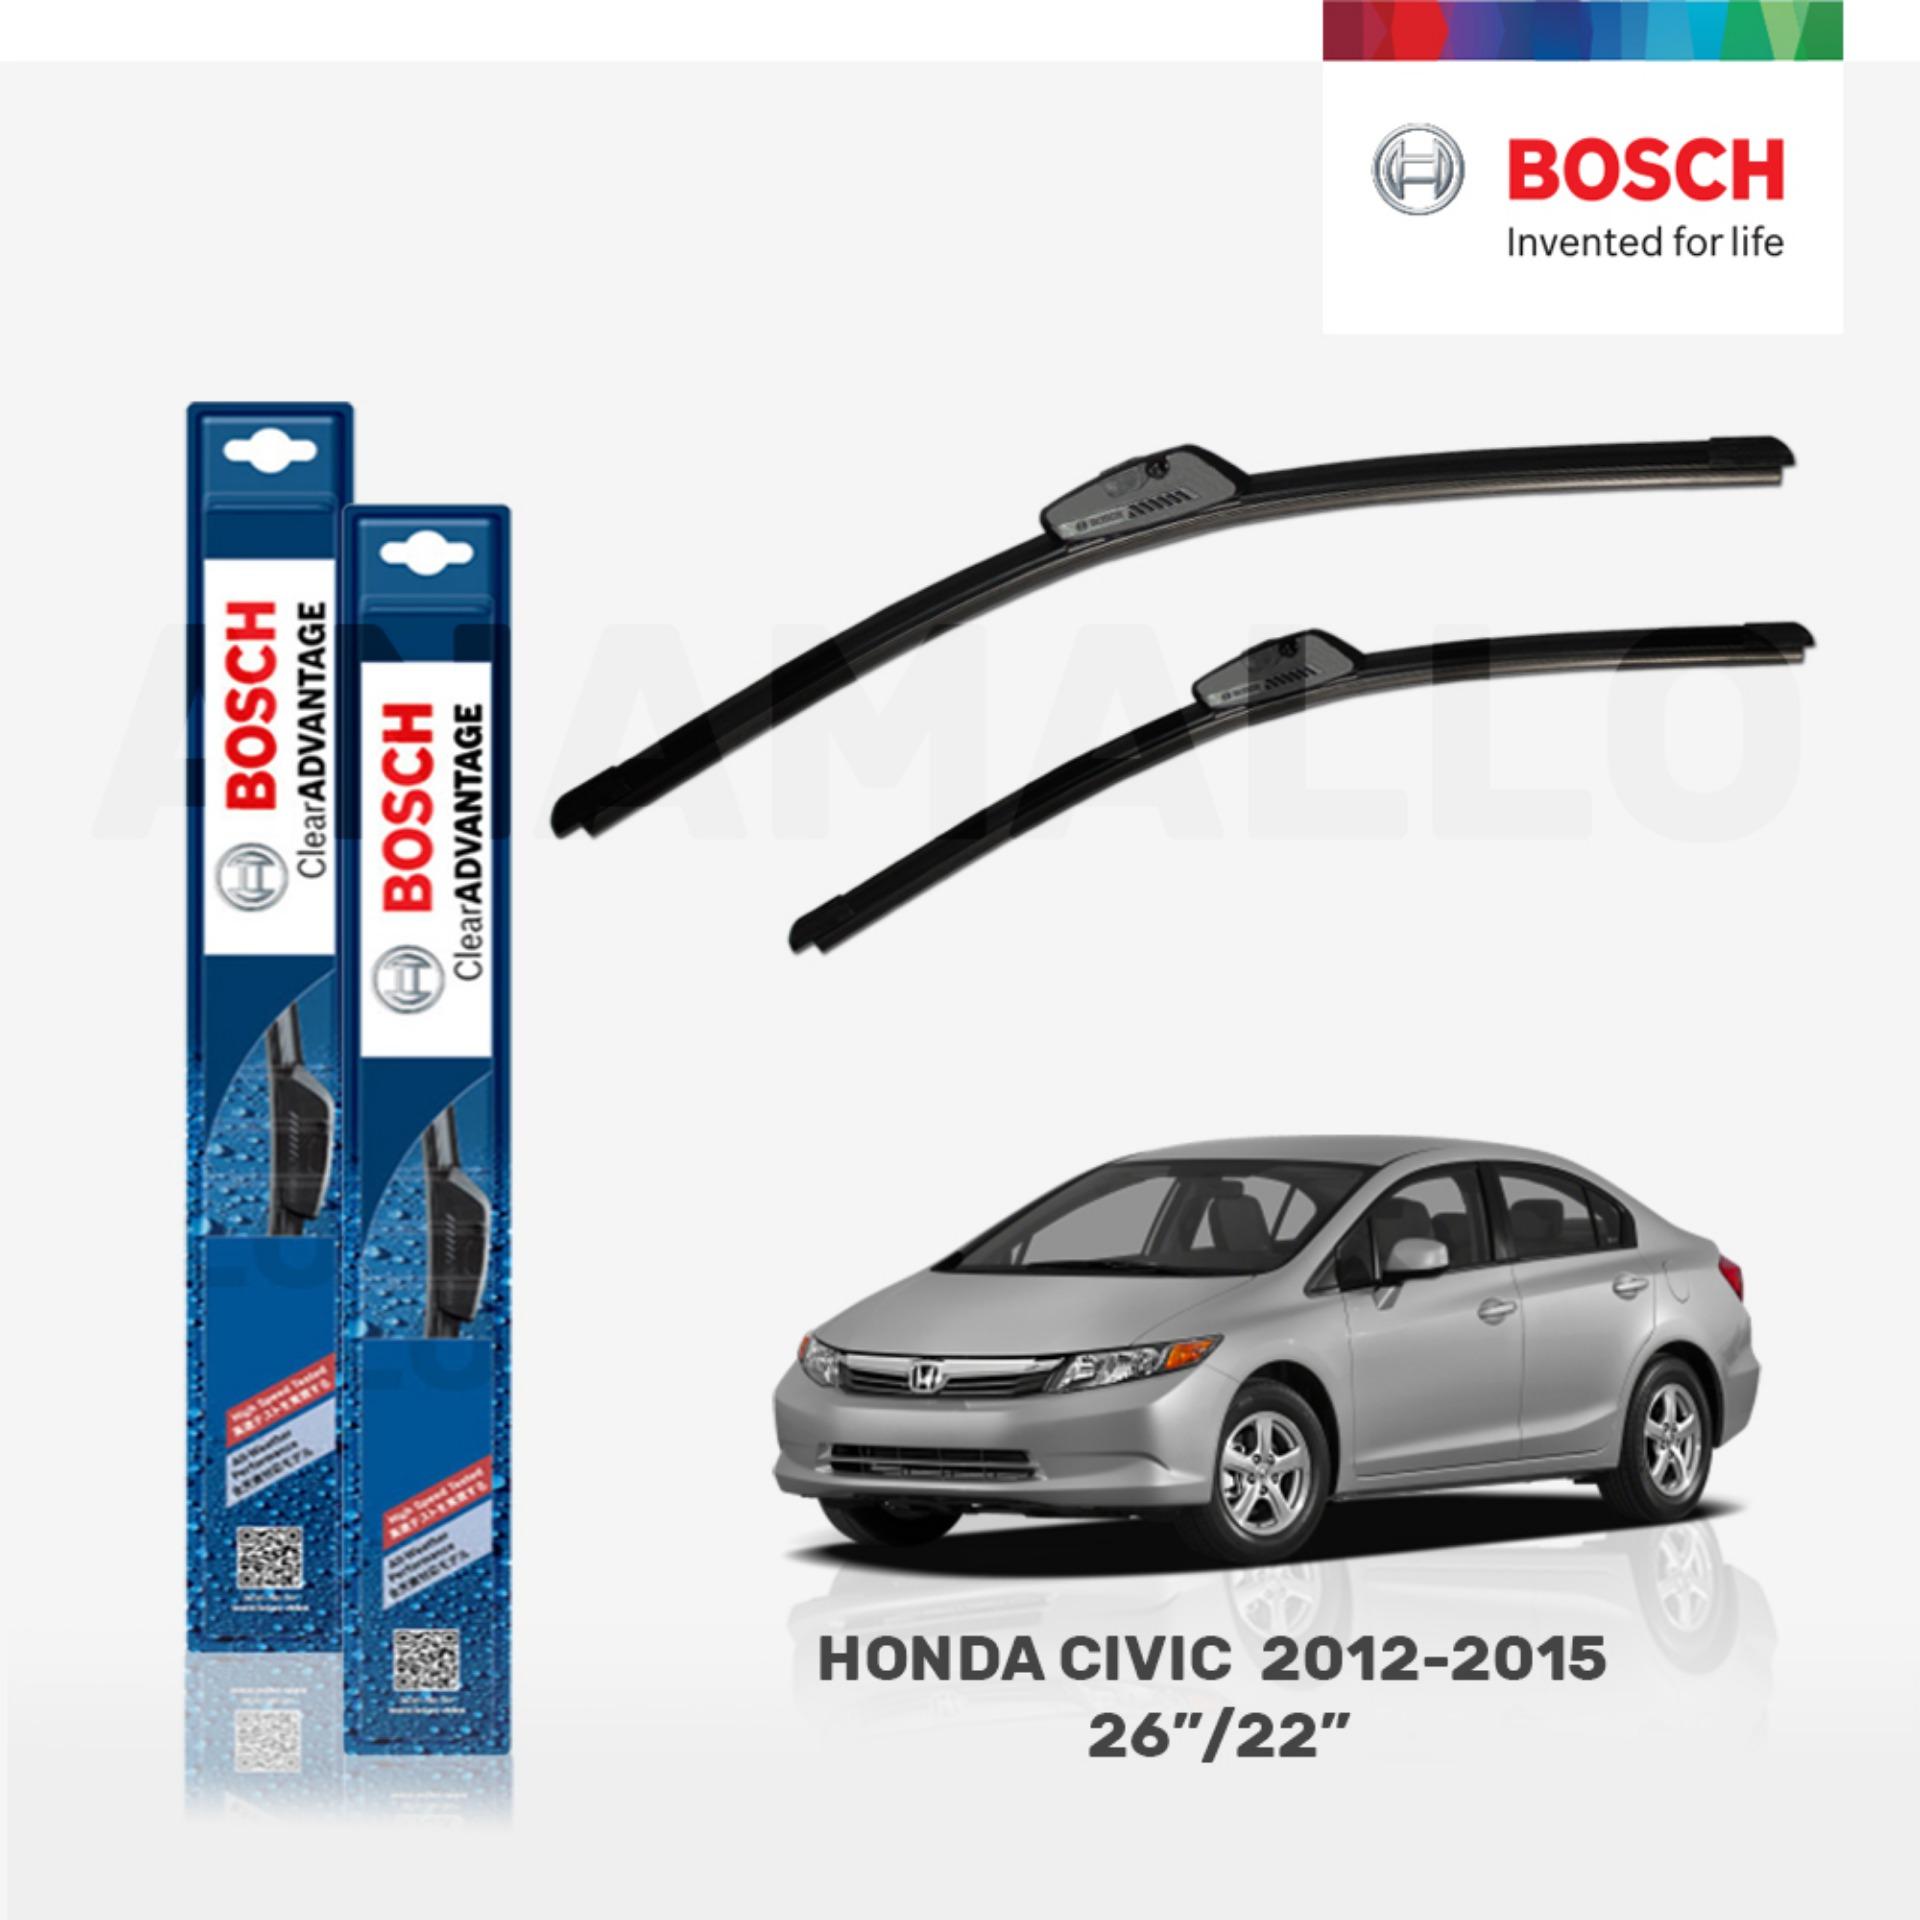 Honda Civic 2015 Windshield Wipers Size